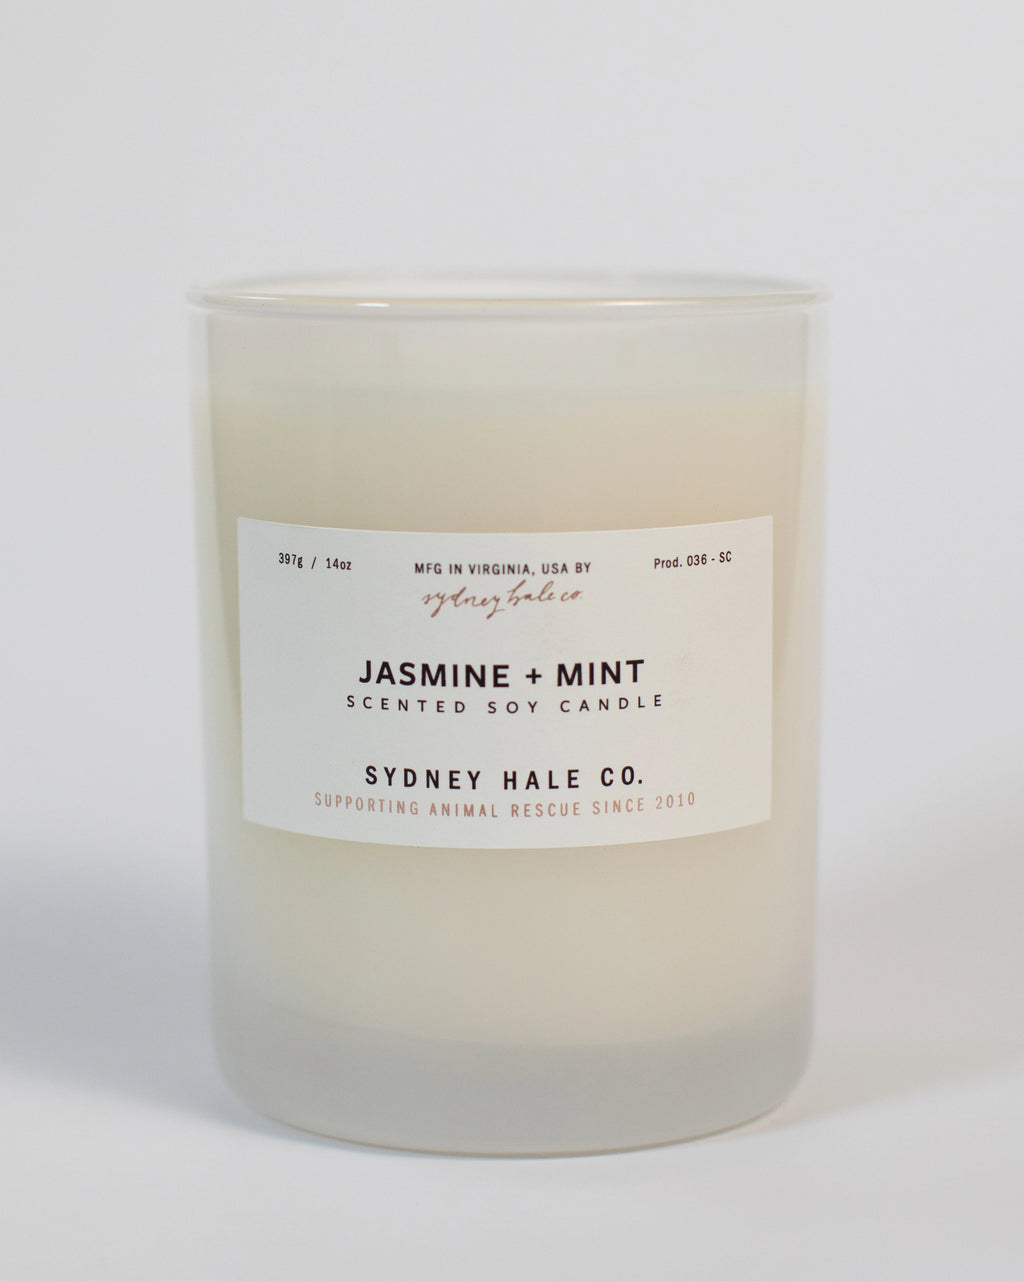 Sydney Hale Co. Candle - Jasmine + Mint